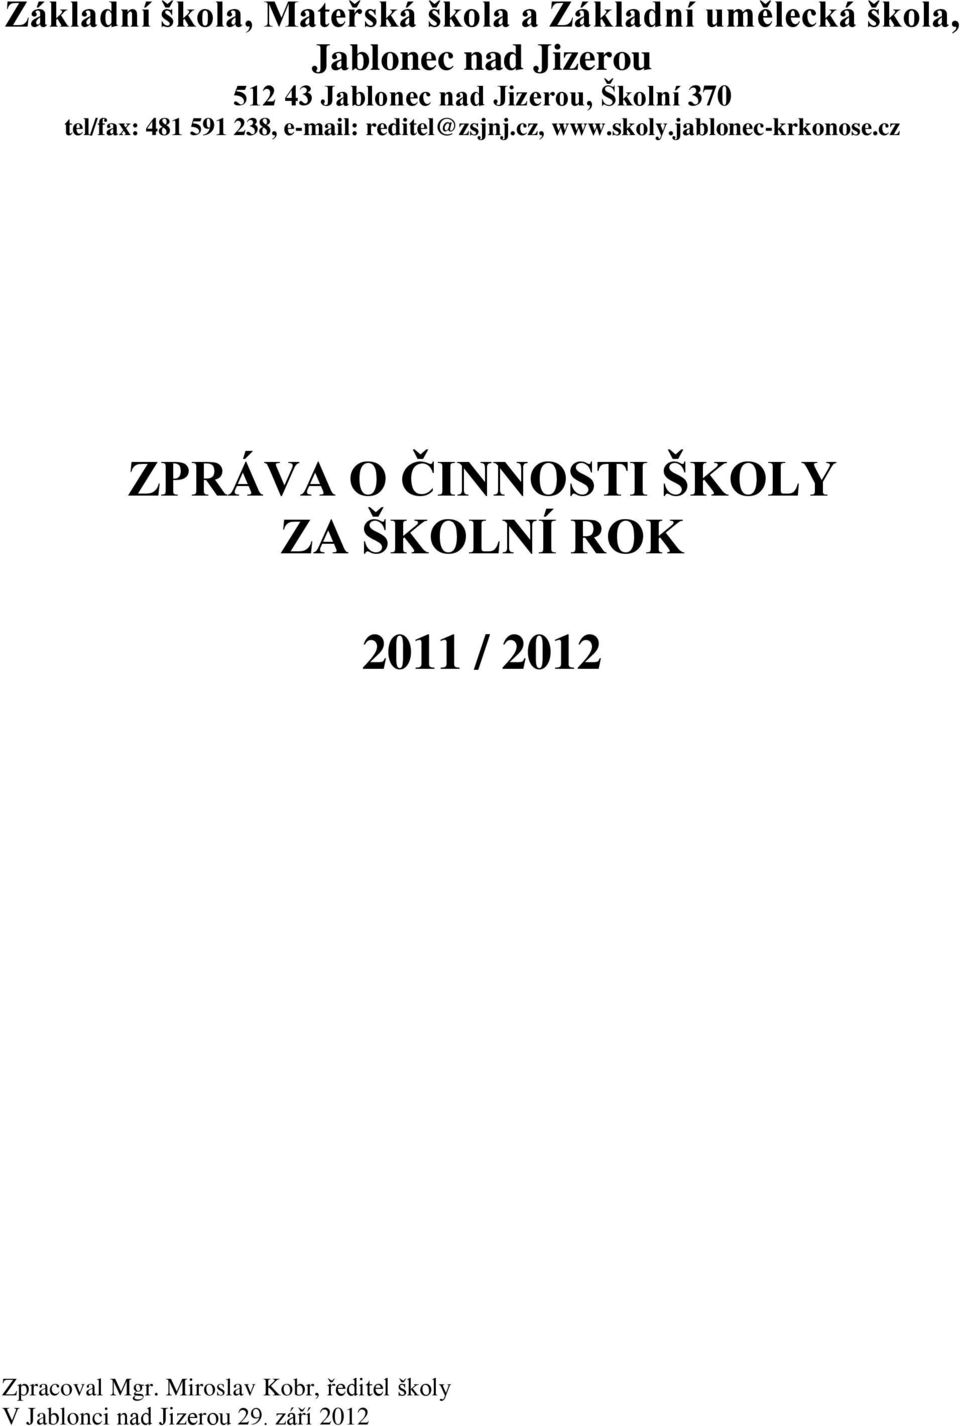 reditel@zsjnj.cz, www.skoly.jablonec-krkonose.